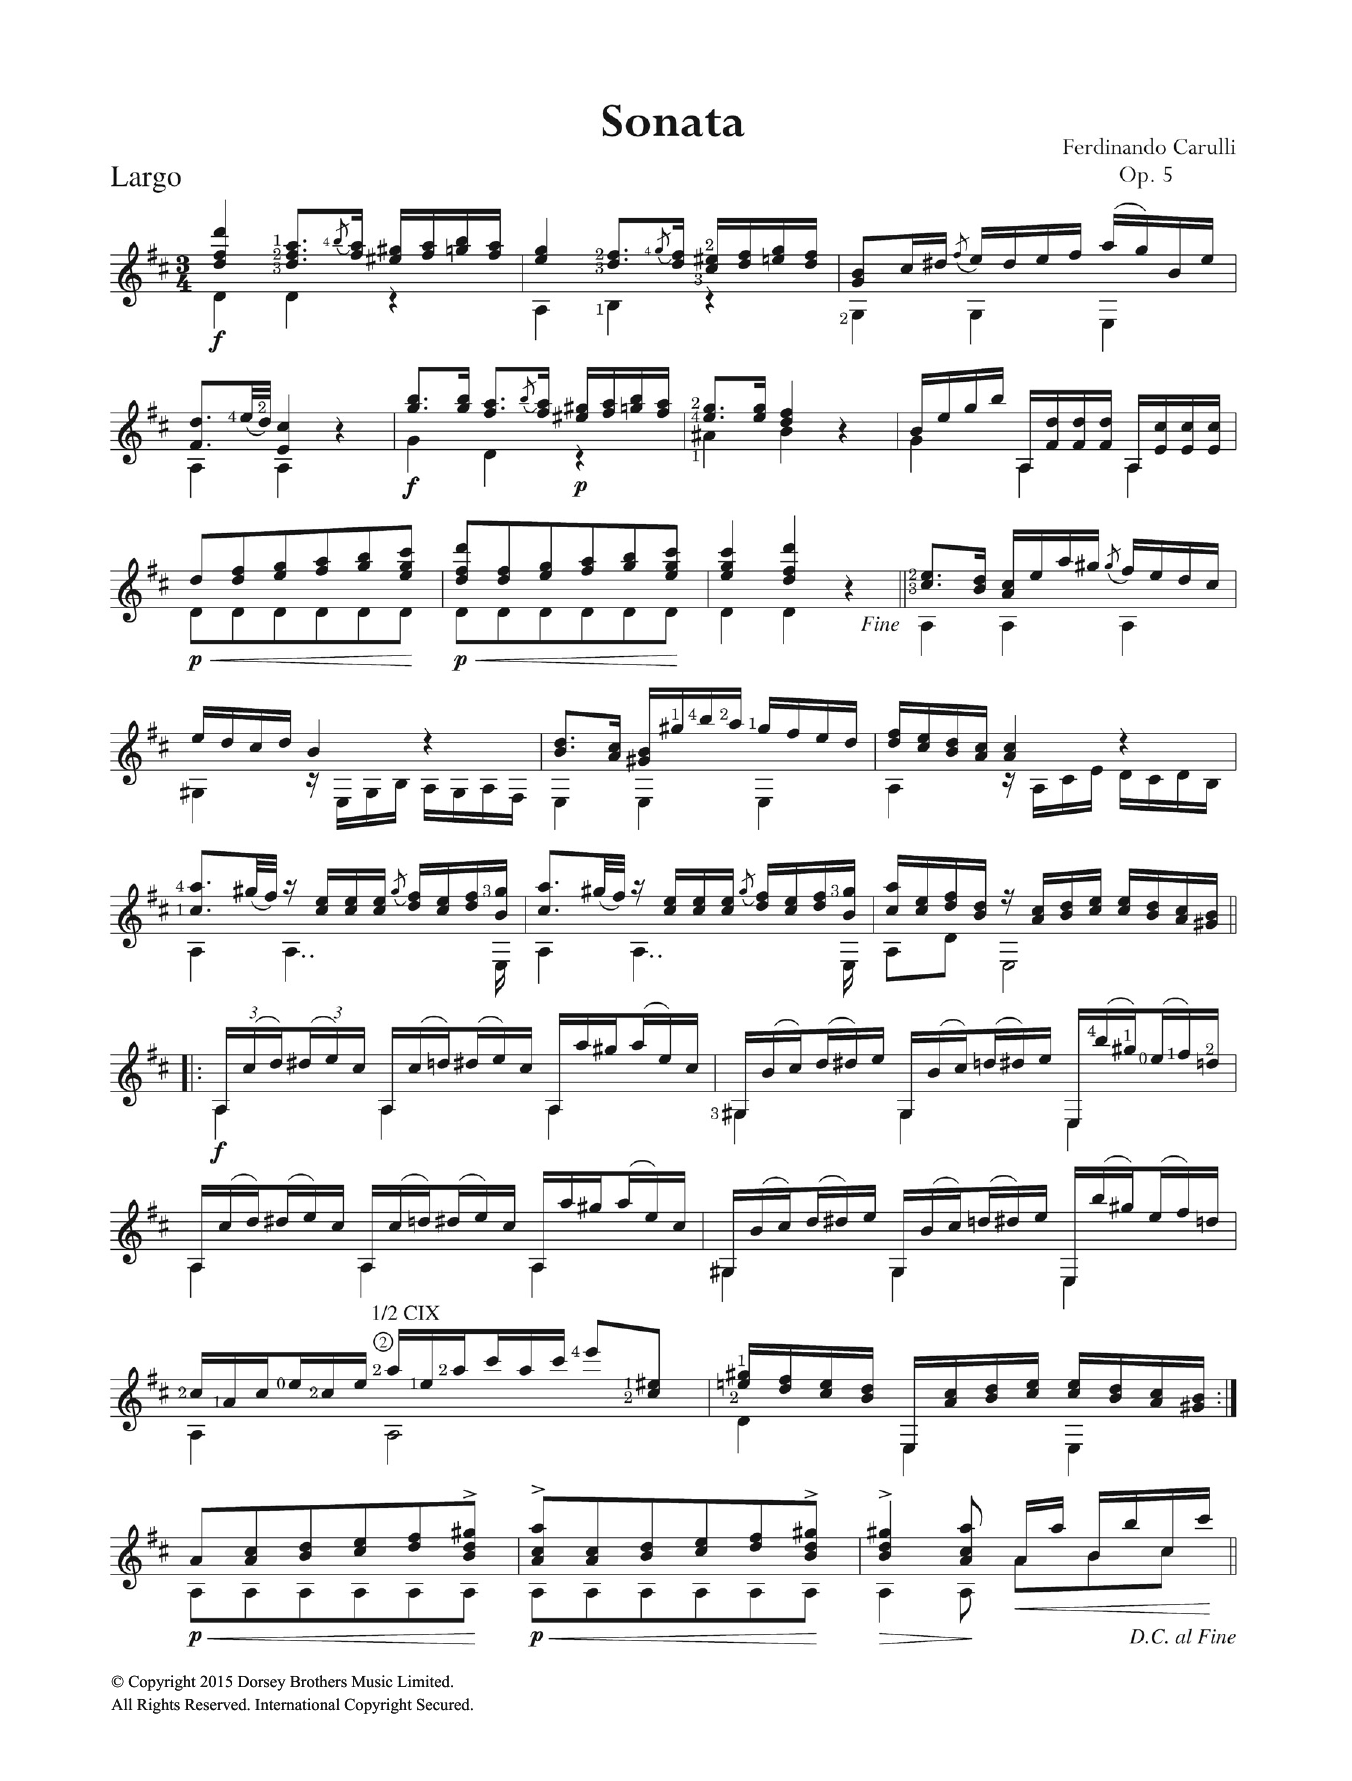 Ferdinando Carulli Sonata Op. 5 Sheet Music Notes & Chords for Guitar - Download or Print PDF